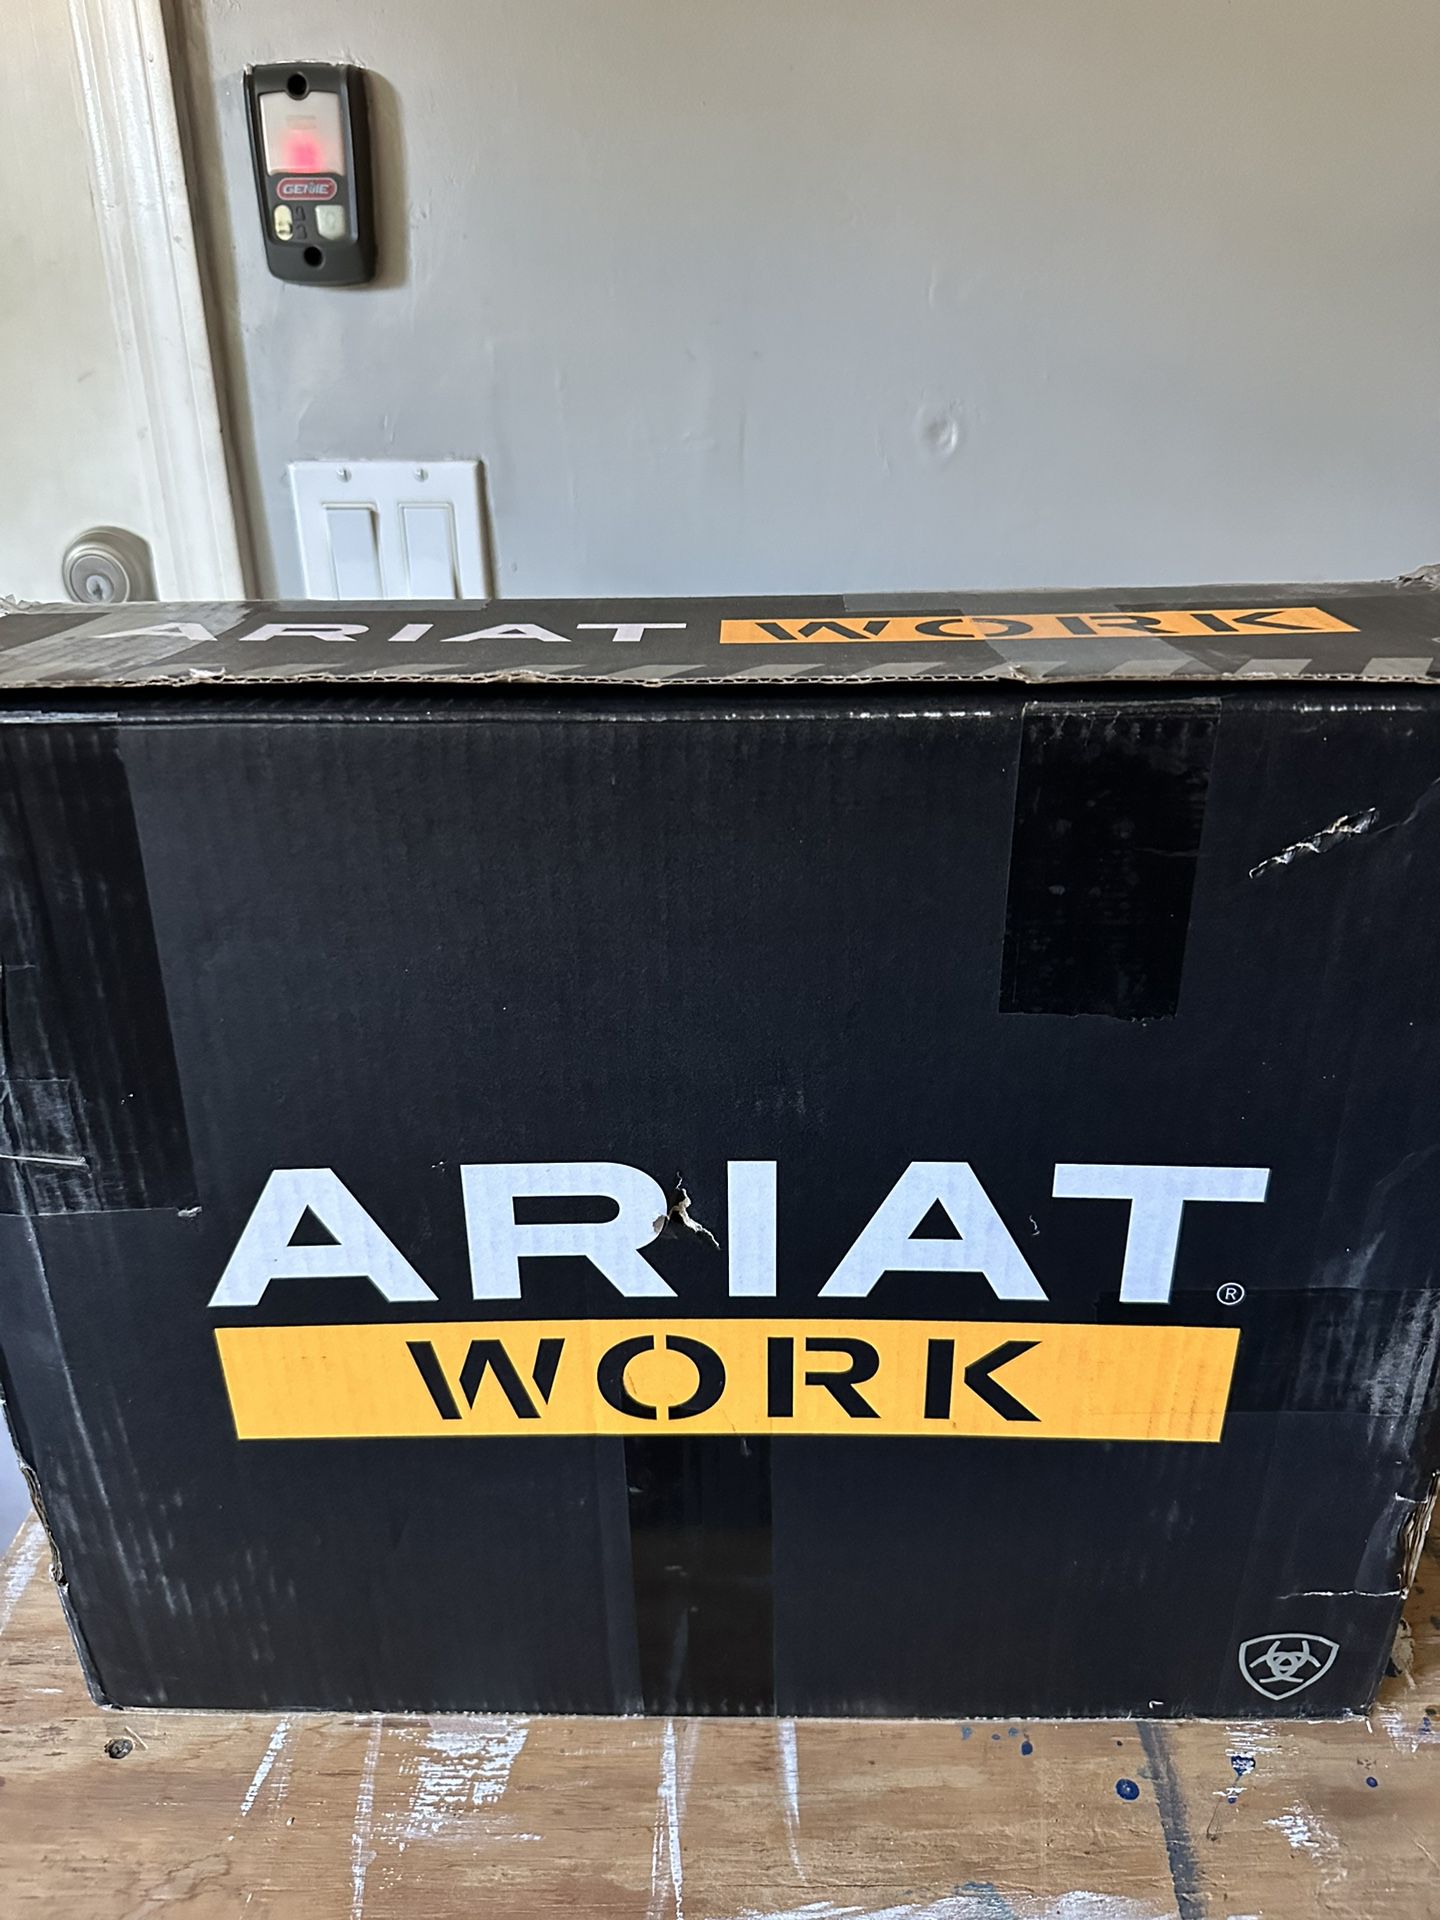 Ariat MetGuard Slip On Work Boots! Size 11.5. Like New!